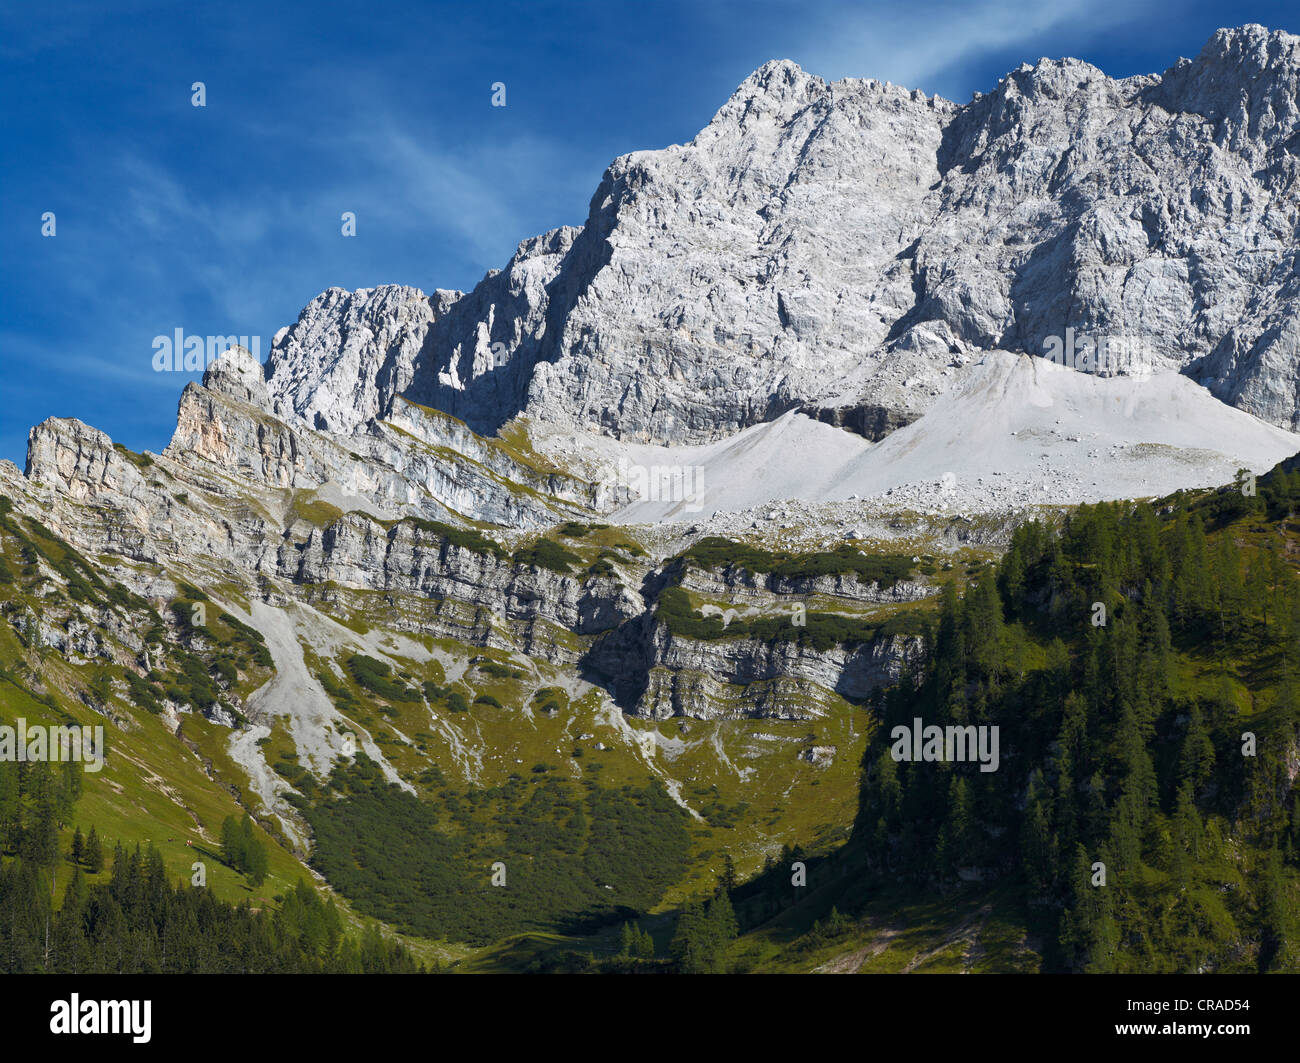 Mt Bettlerkarspitze from the Eng, Risstal, Austria, Europe Stock Photo